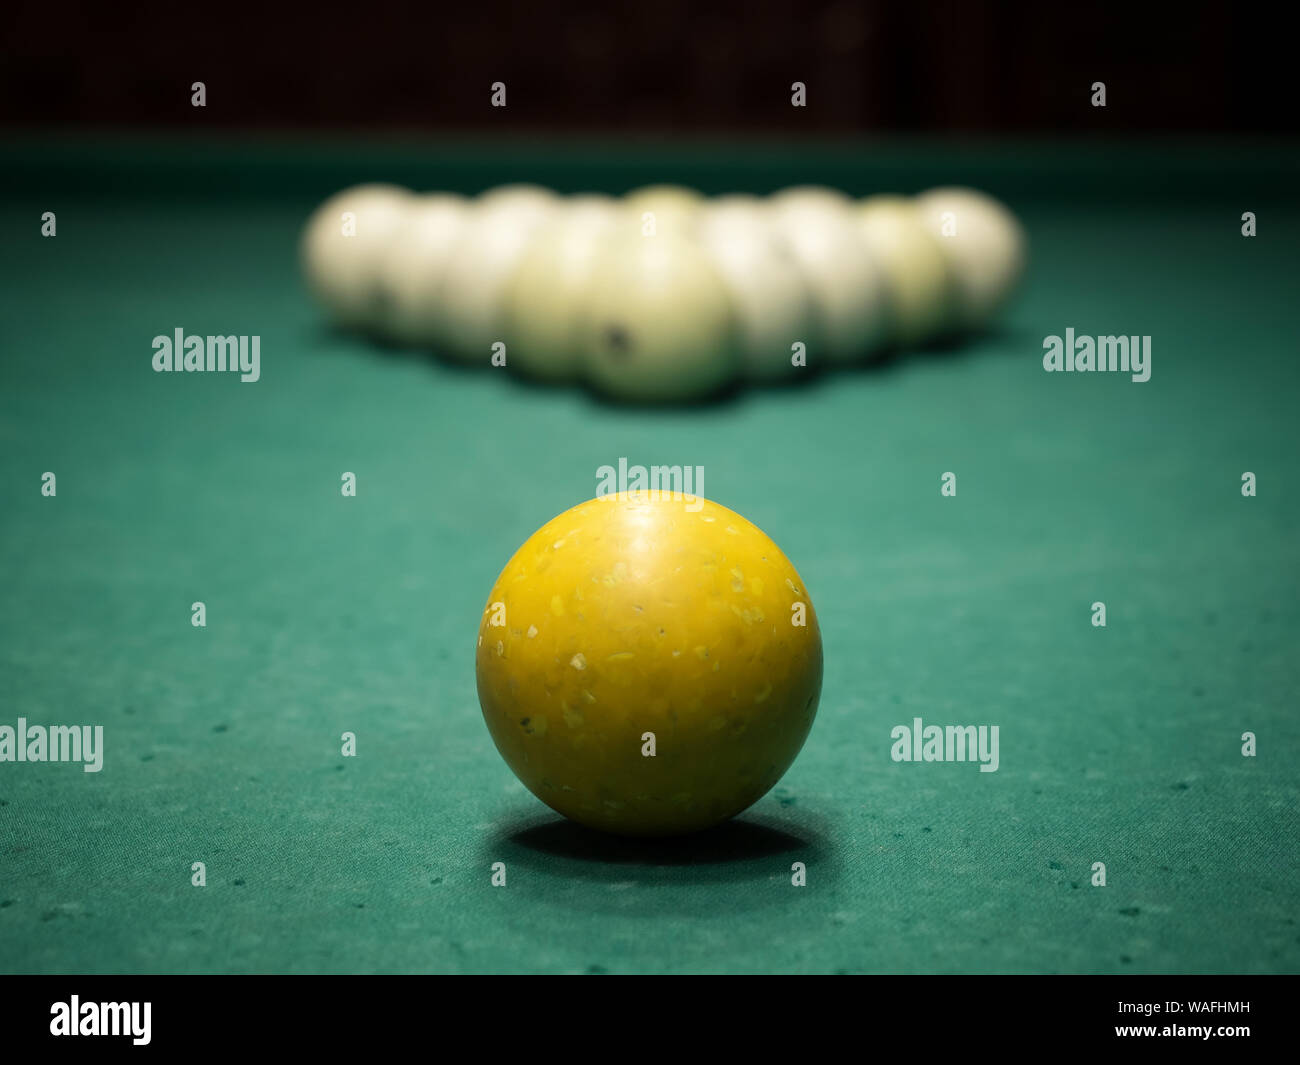 Billiard game. Old pool balls close-up on light beam. Shallow depth of field Stock Photo